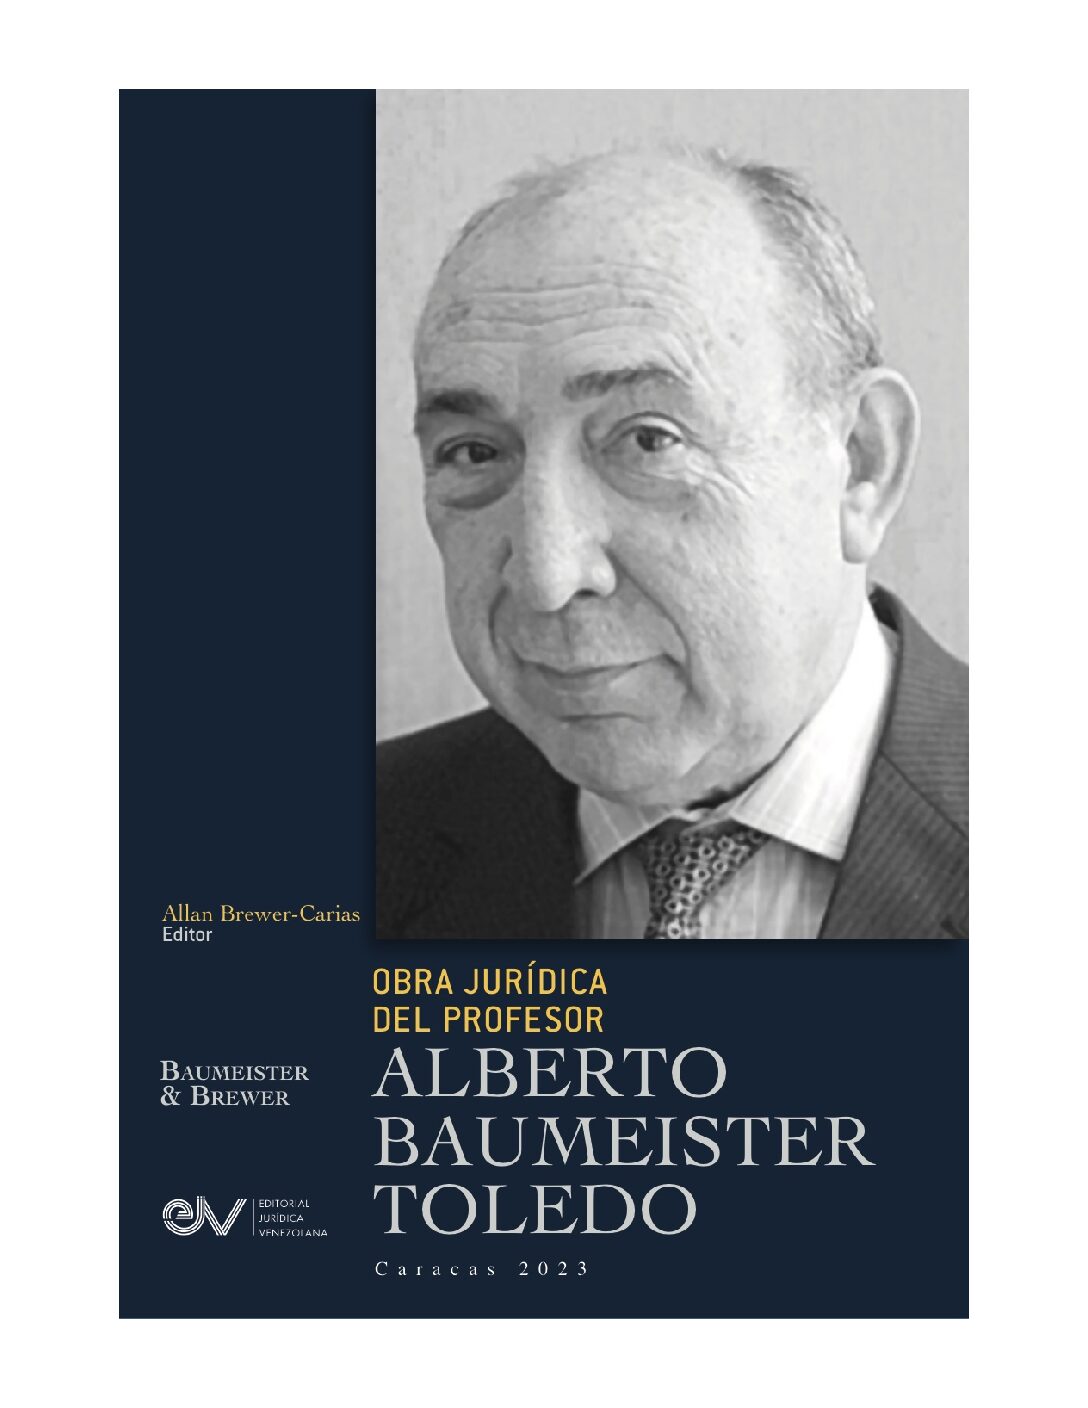 Disponible a texto completo Obra jurídica del profesor Alberto Baumeister Toledo